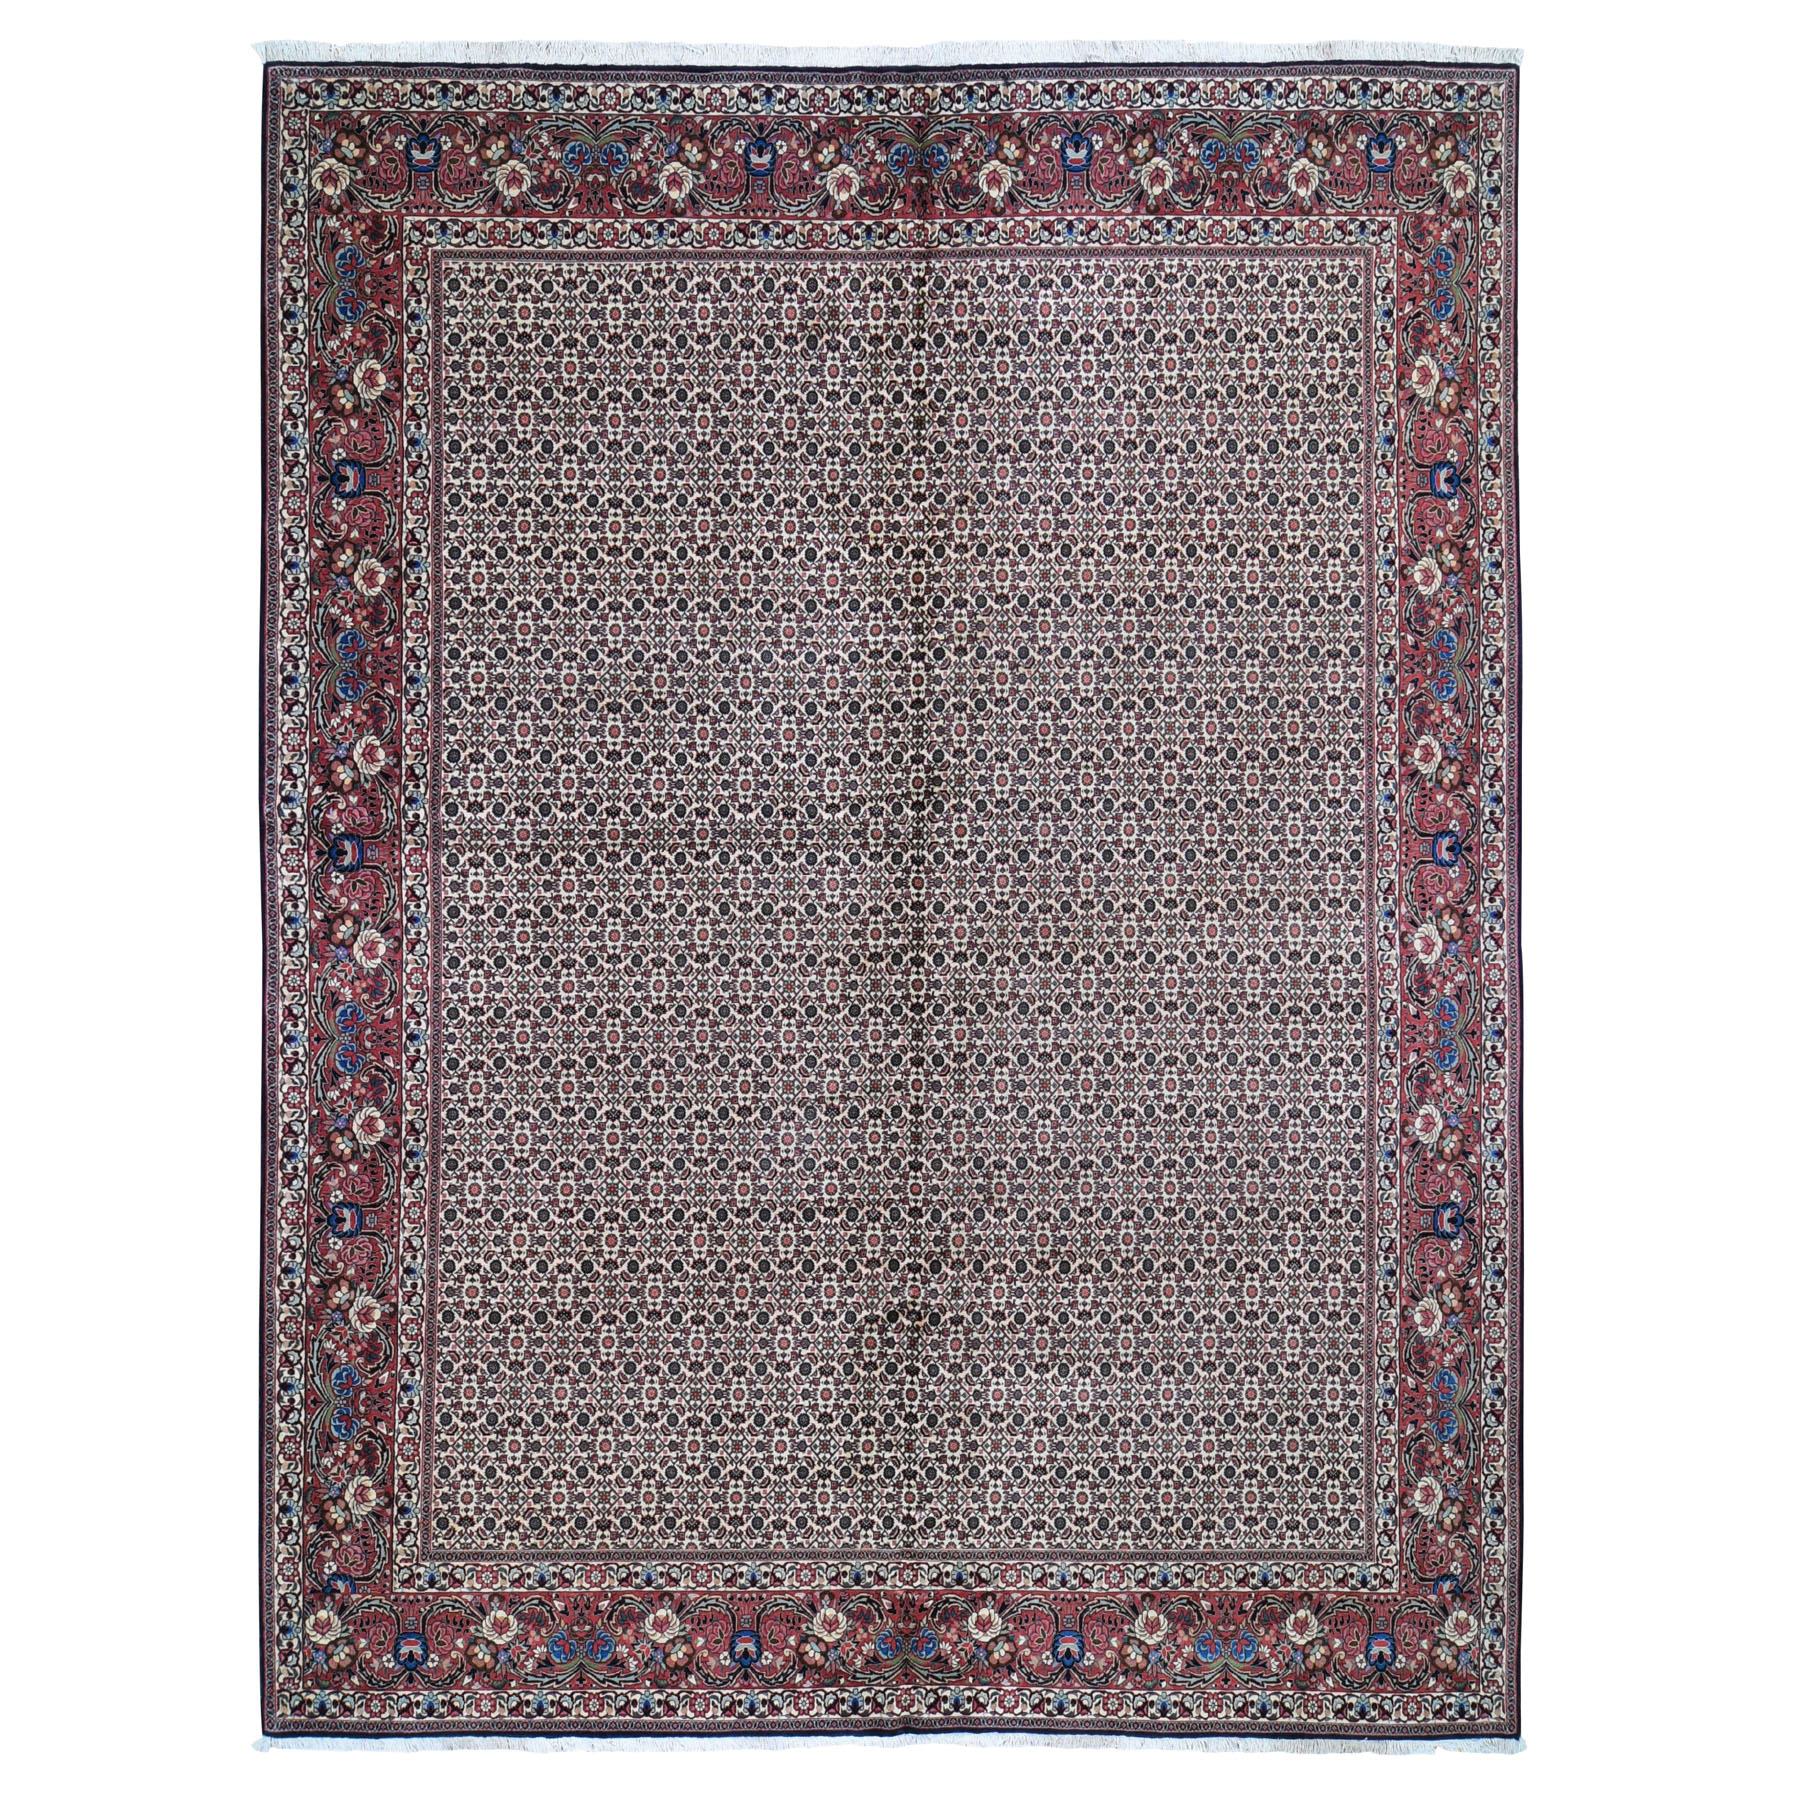 10'x12'9" New Persian Bijar Fish Design 400 KPSI Wool And Silk Hand Woven Oriental Rug 